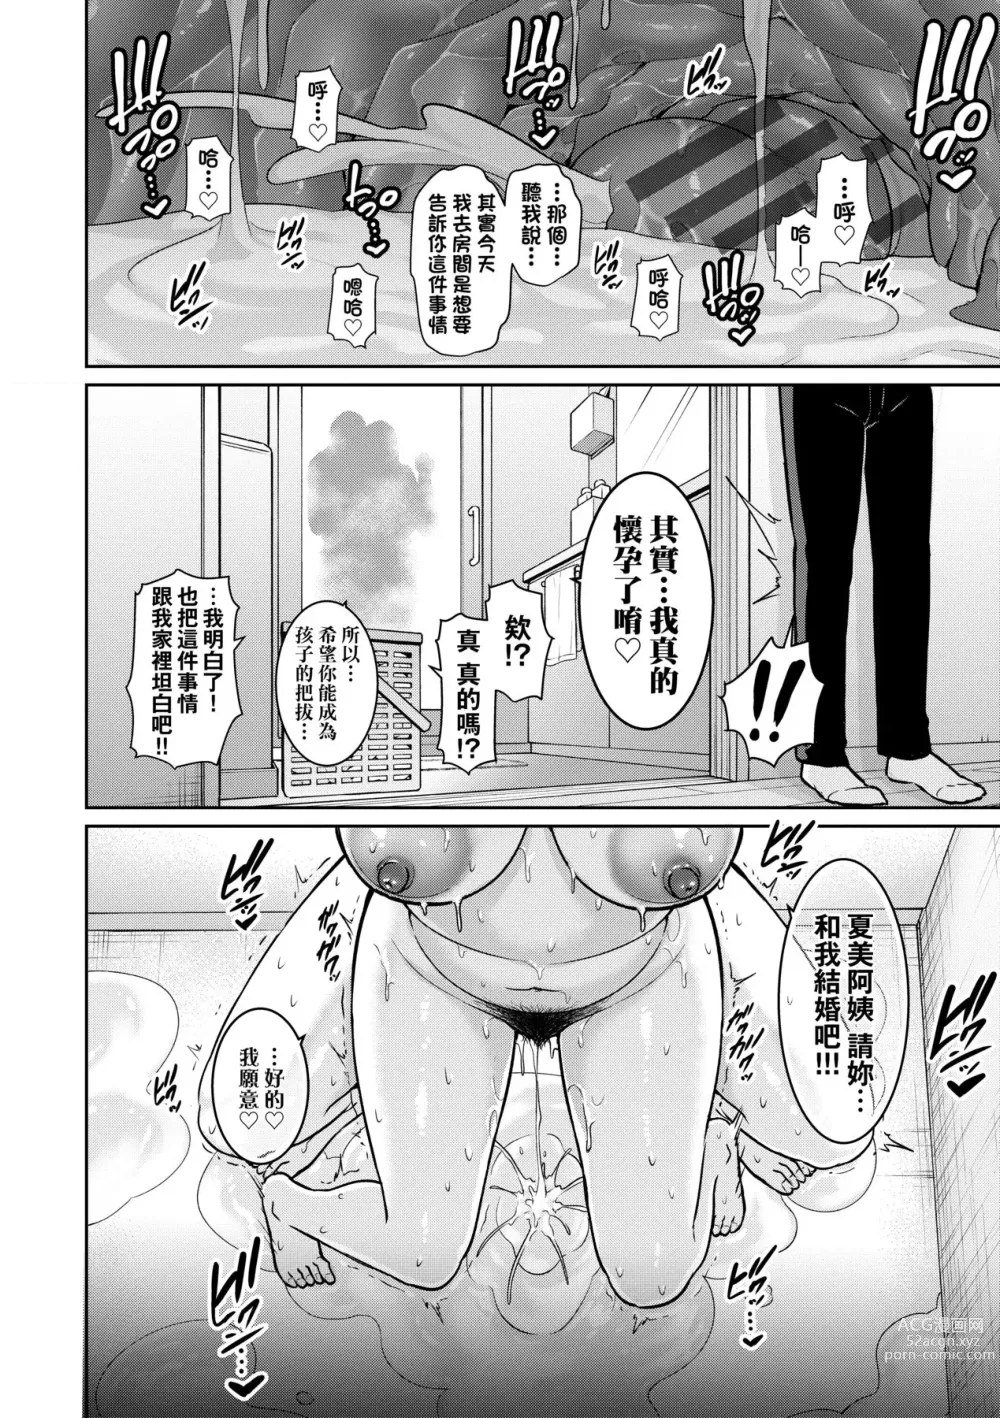 Page 27 of manga 續．朋友的馬麻